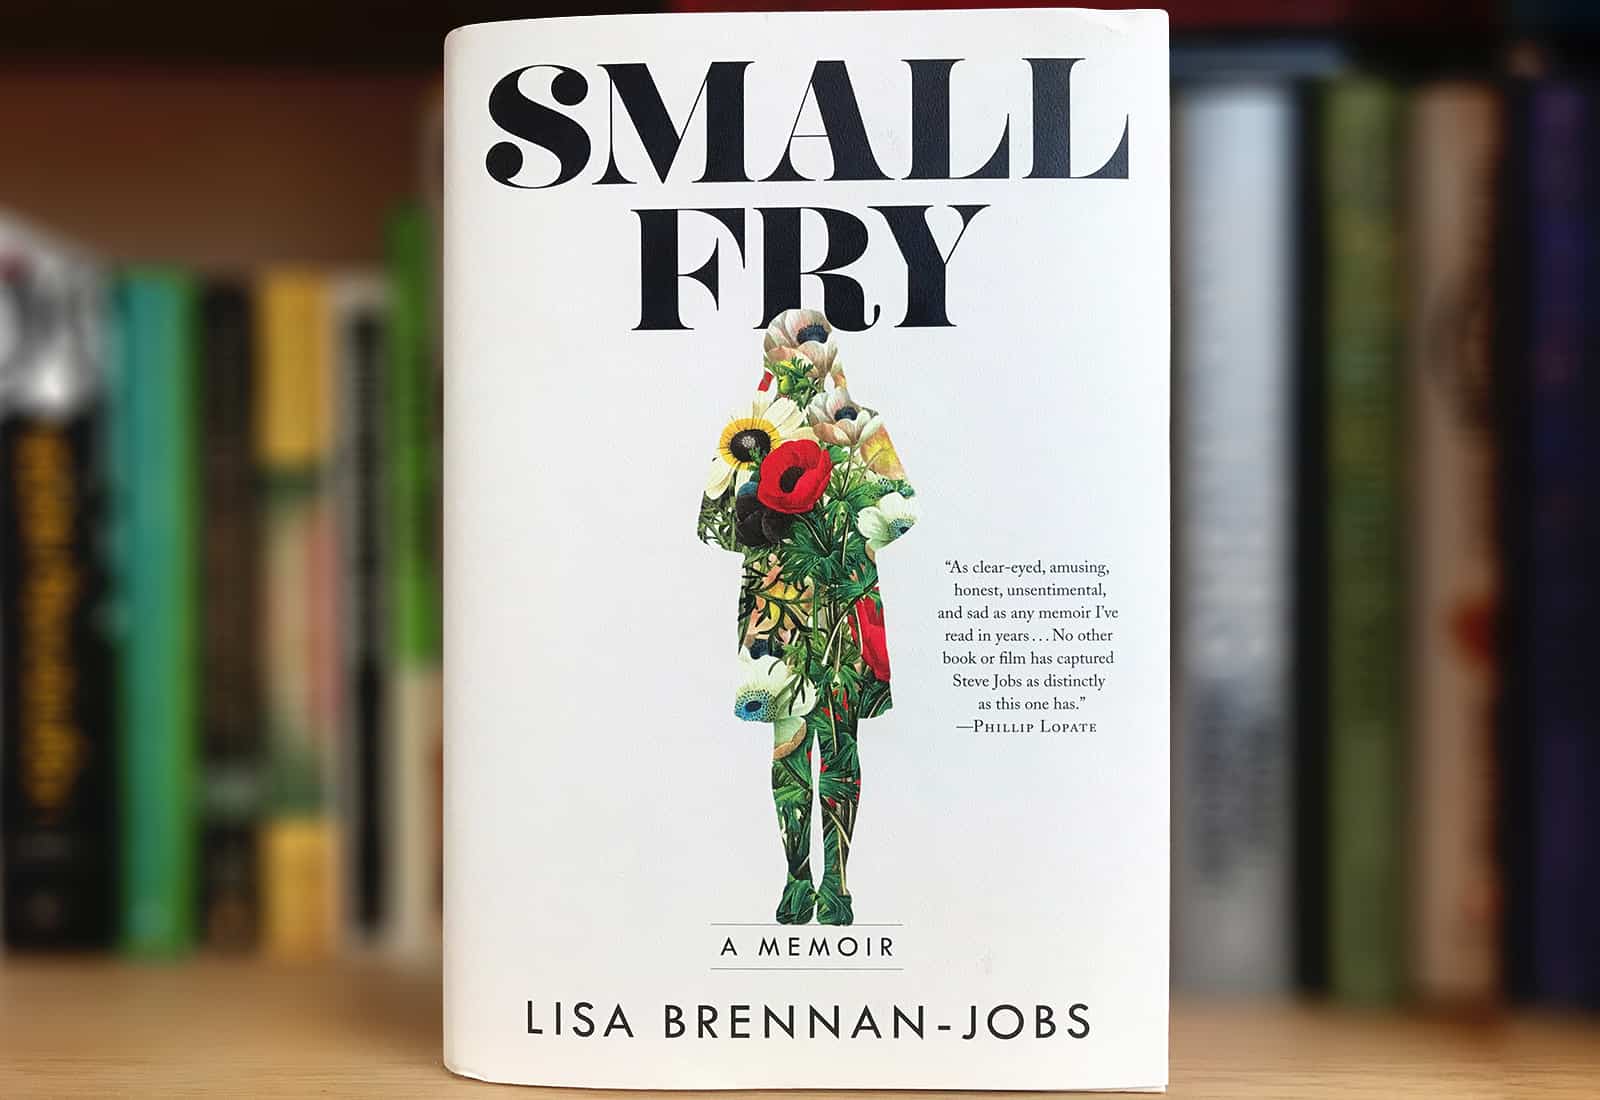 Think Steve Jobs was tough as a boss? Lisa Brennan-Jobs memoir "Small Fry" tells what he was like as a father.